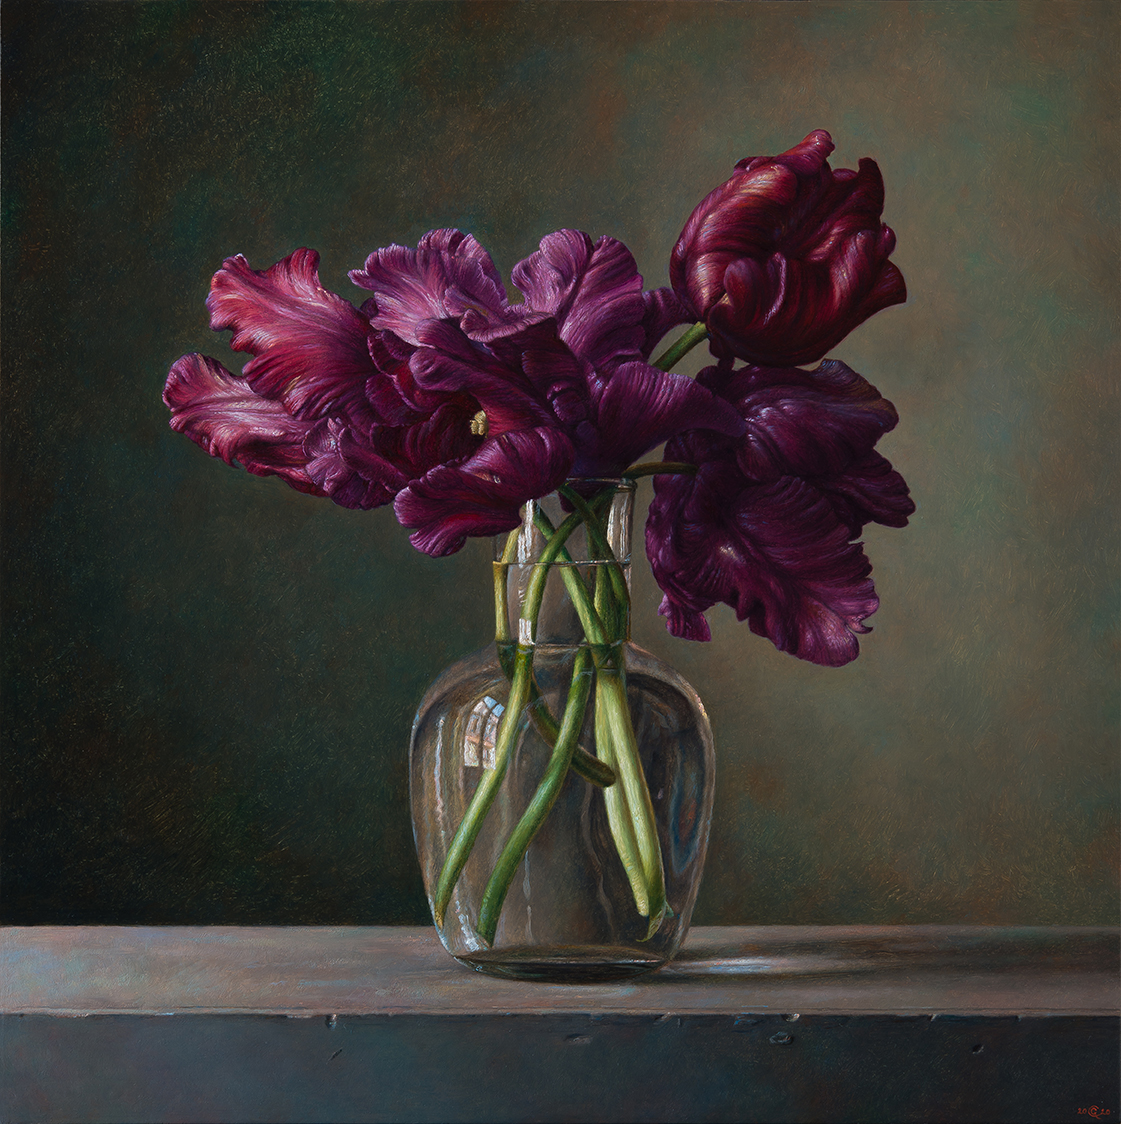 Black Tulips - 2020 olio su tavola cm 50x50 © Gianluca Corona